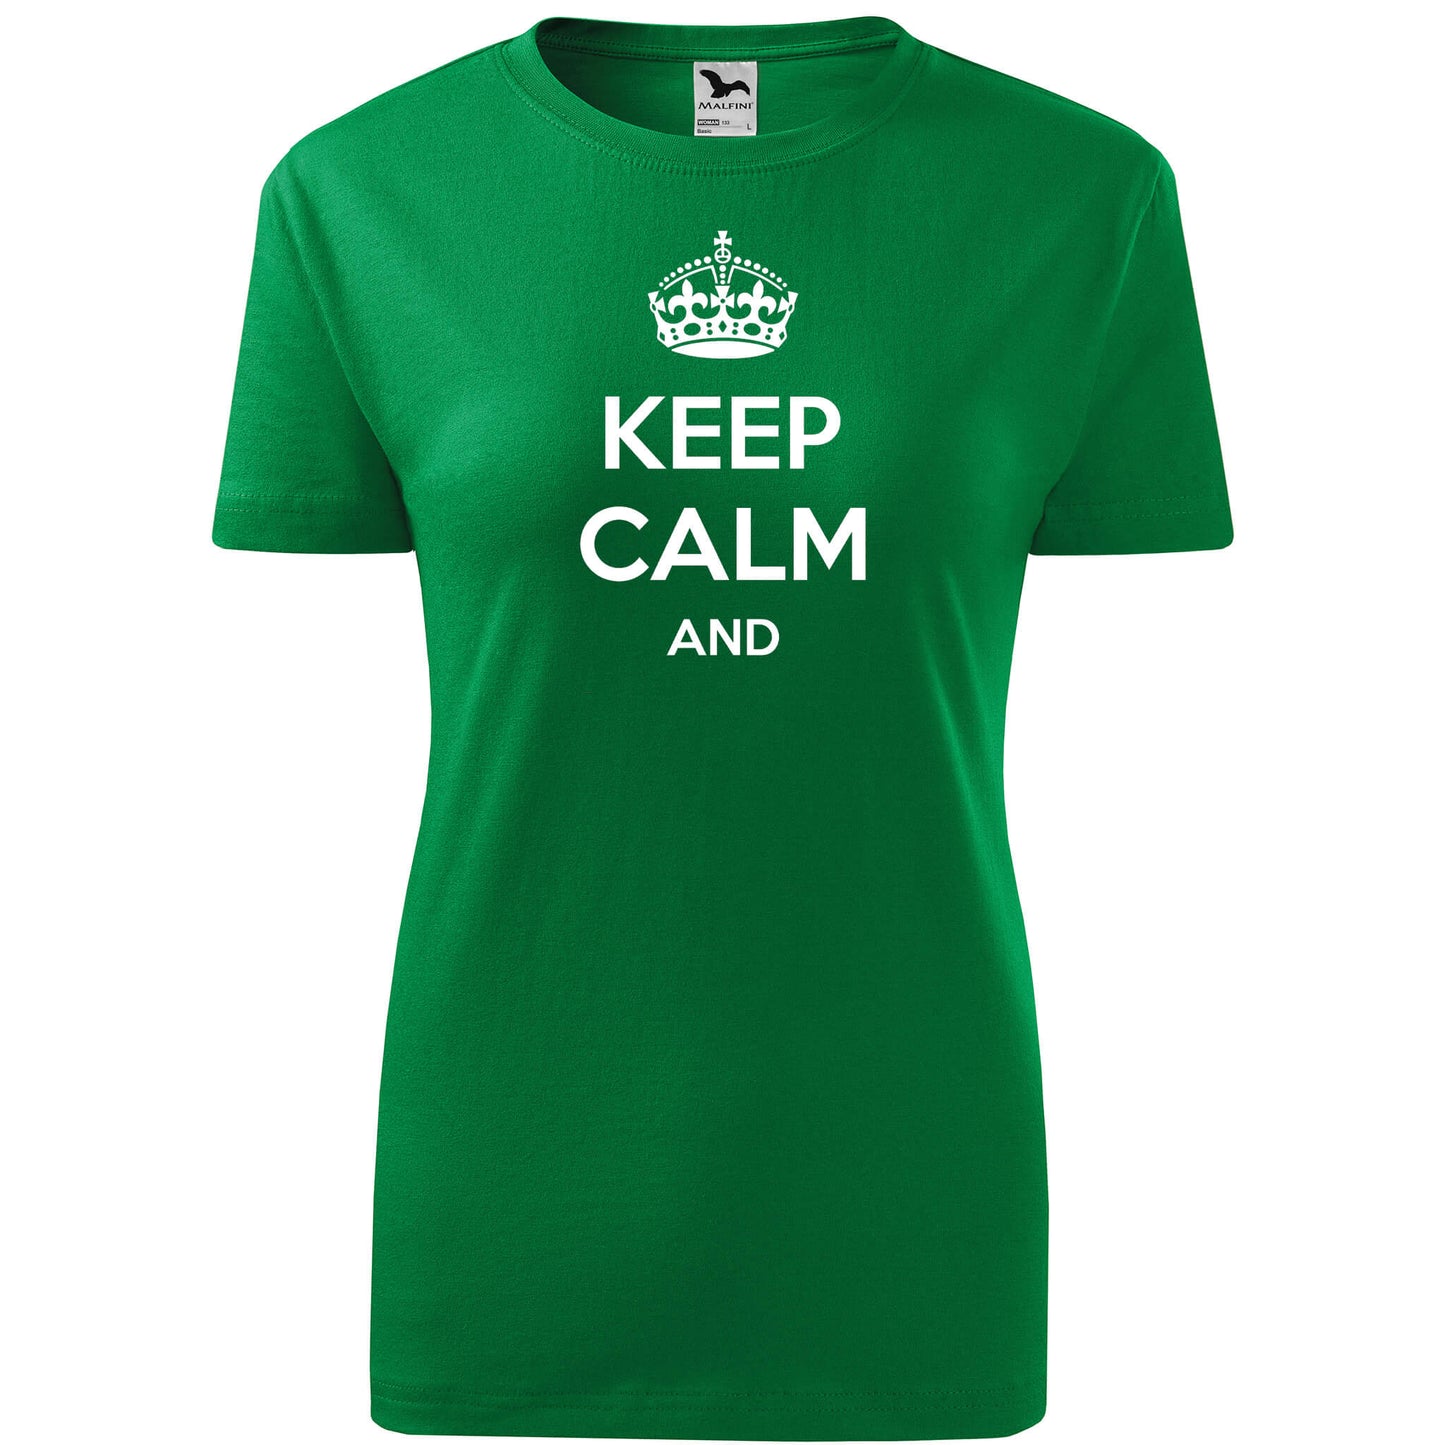 T-shirt - Keep calm and ... - Customizable - rvdesignprint